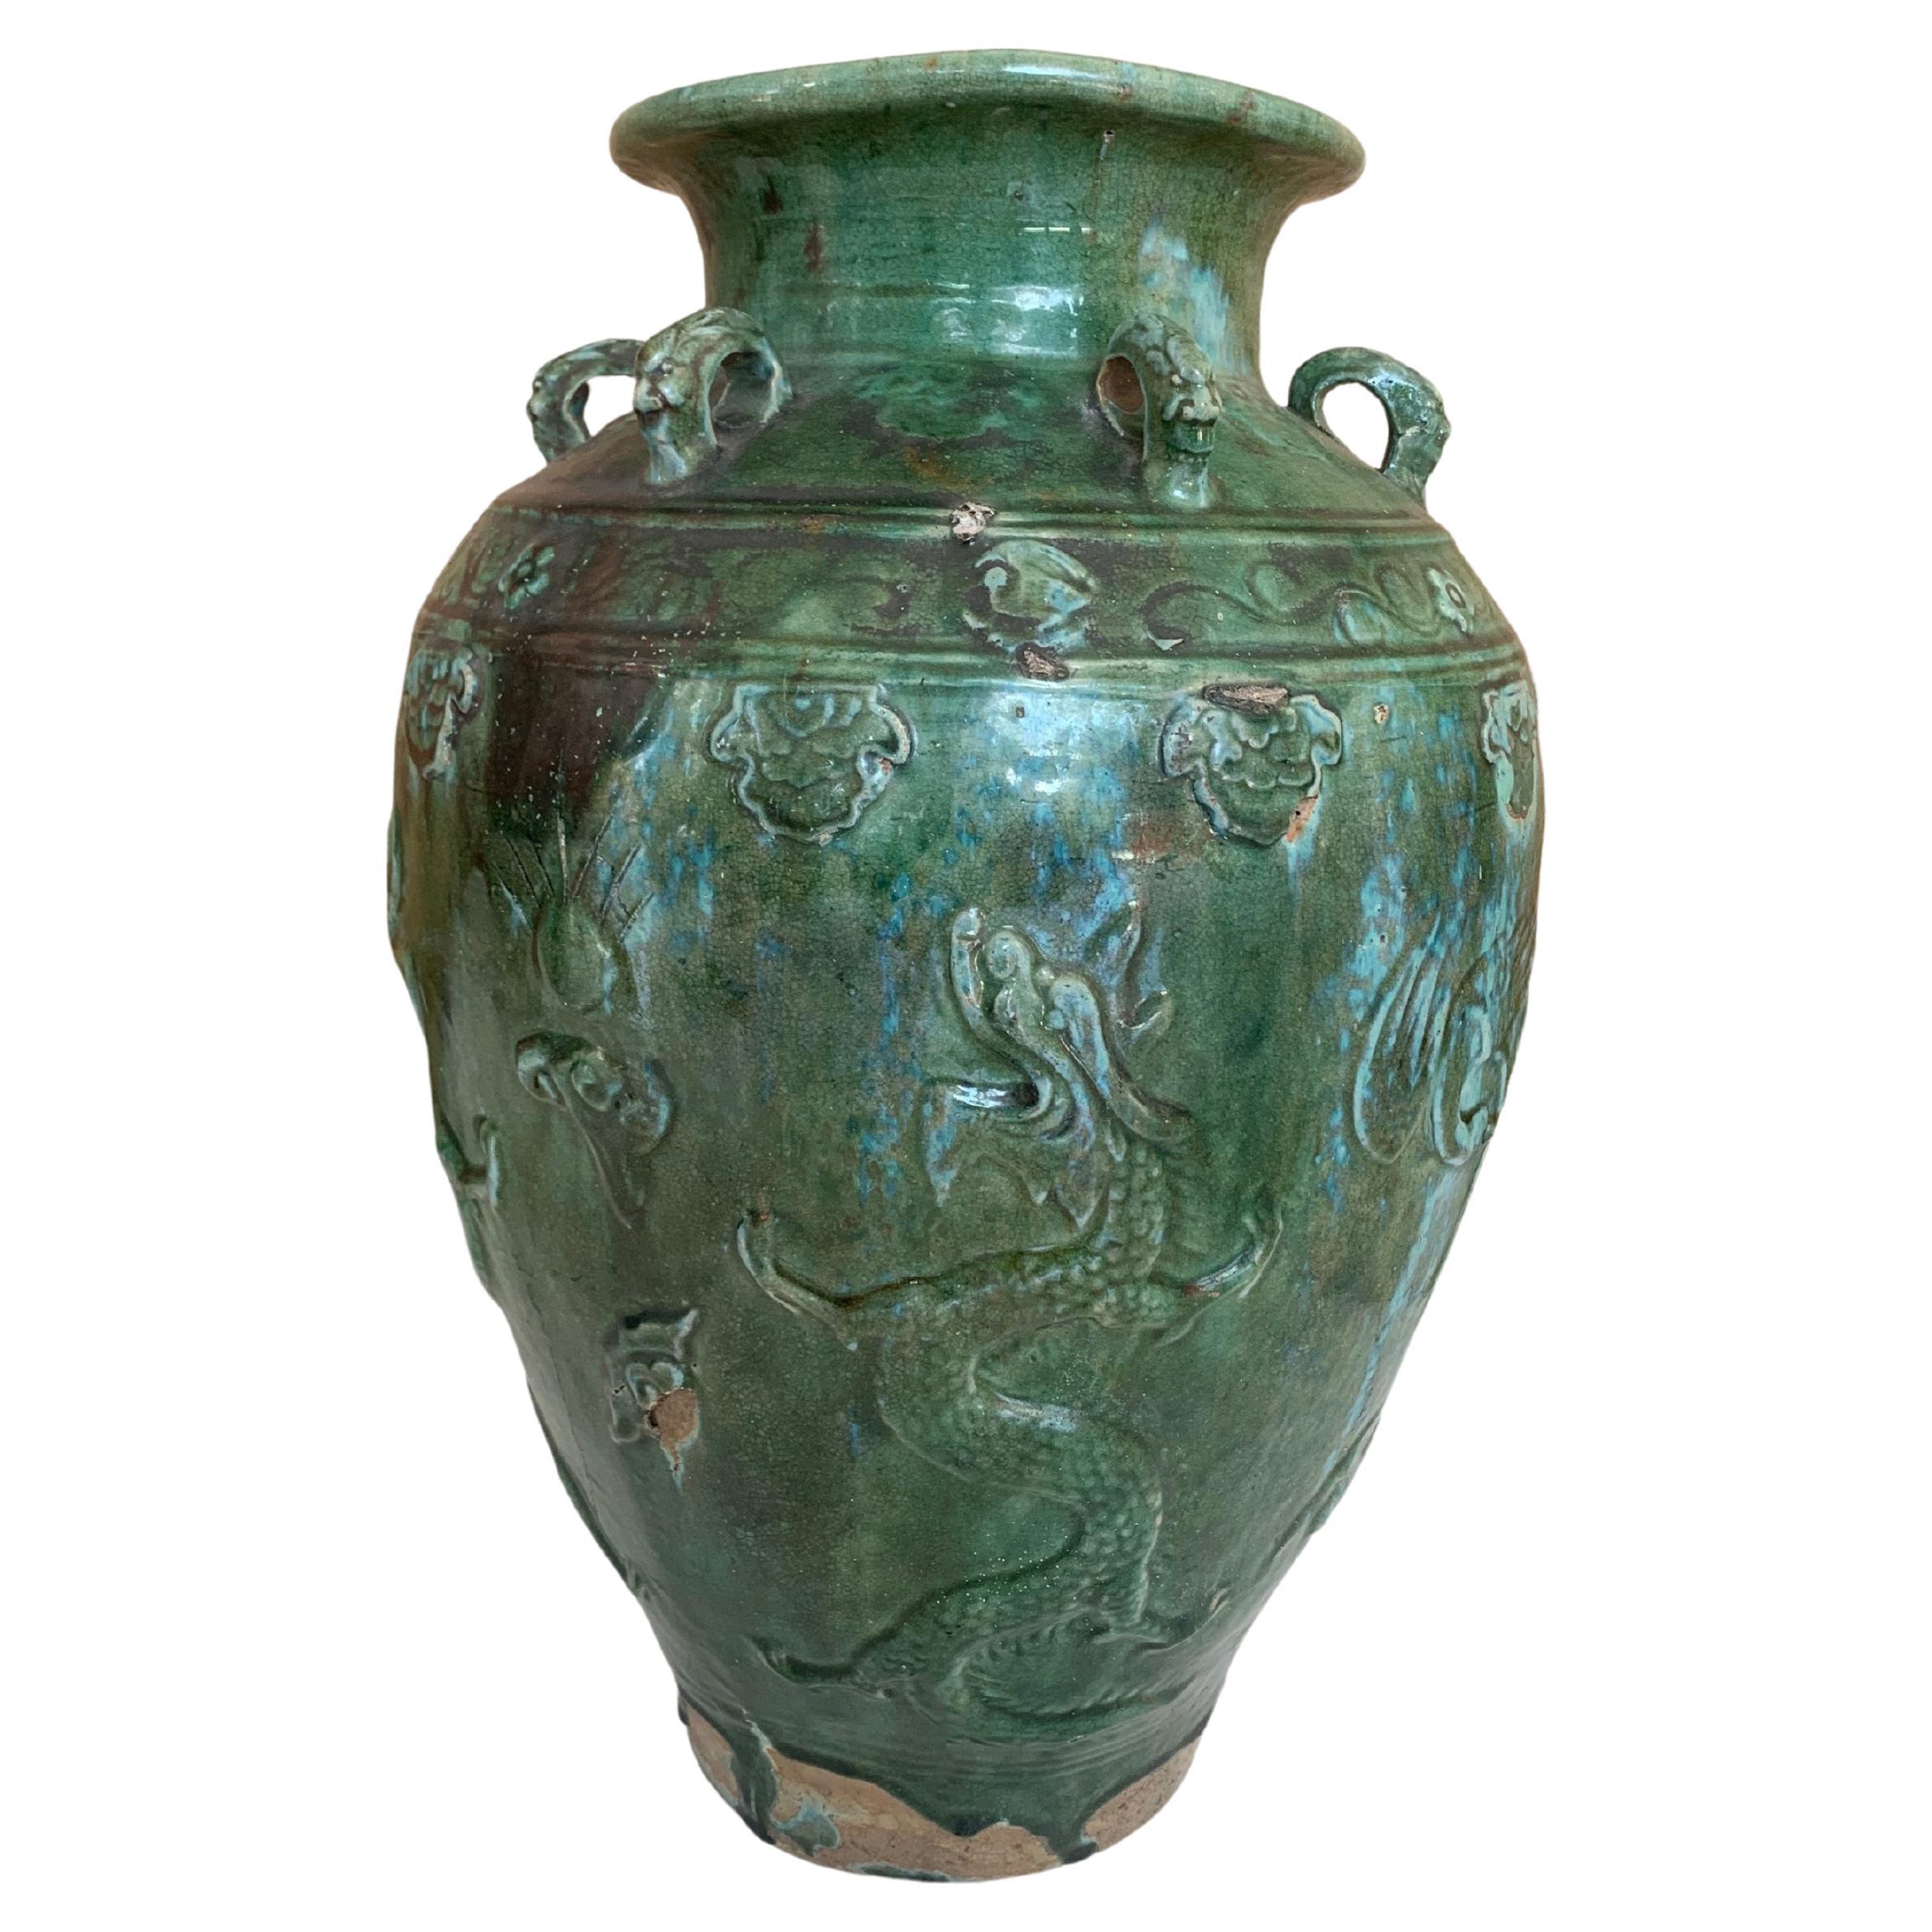 Chinese Ceramic "Martaban" Jar with Dragon Engravings & Tiger Medallions